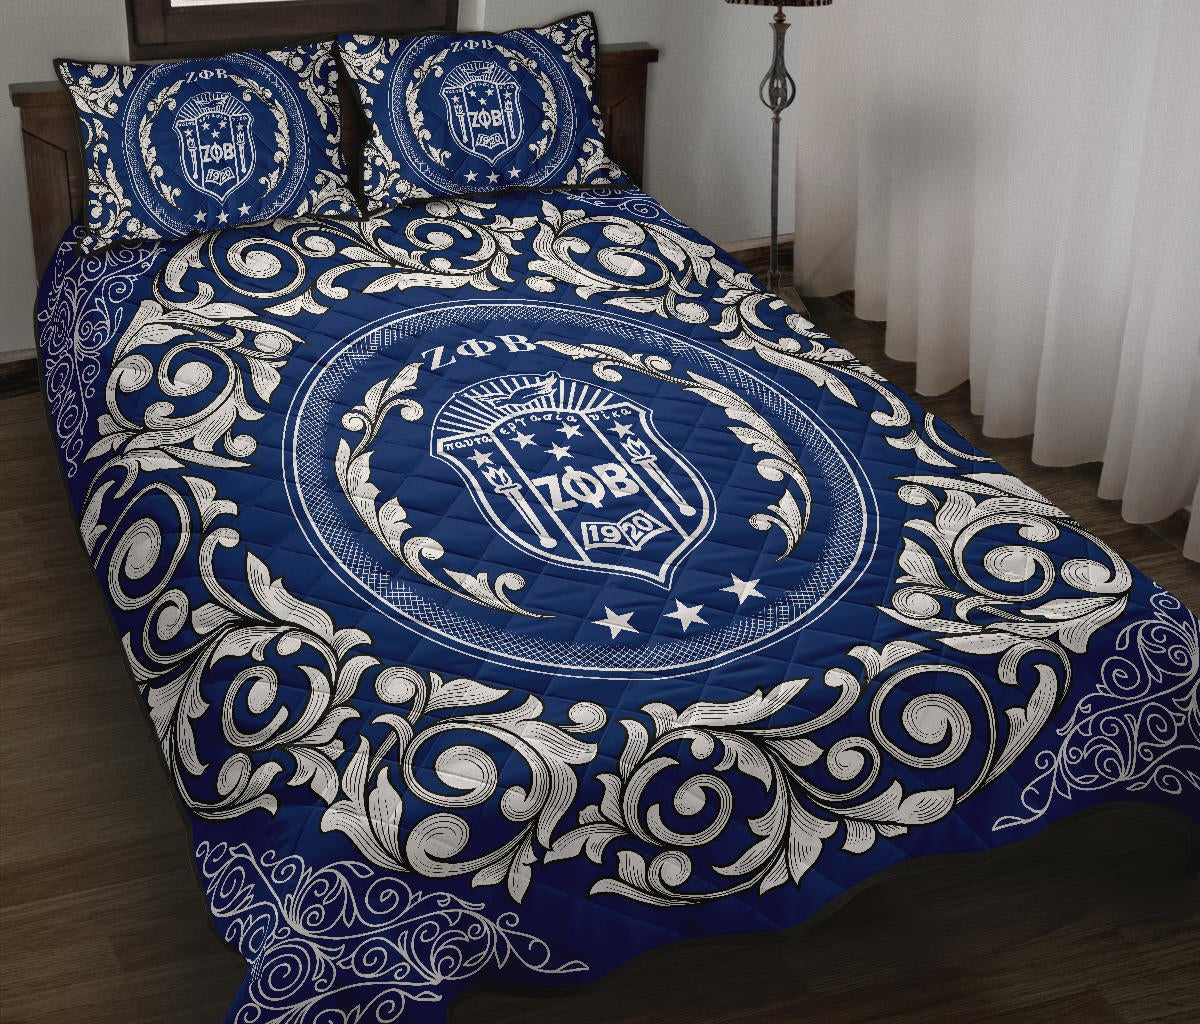 Tothetopcloset Home Set -Zeta Phi Beta Sorority Quilt Bed Set J08